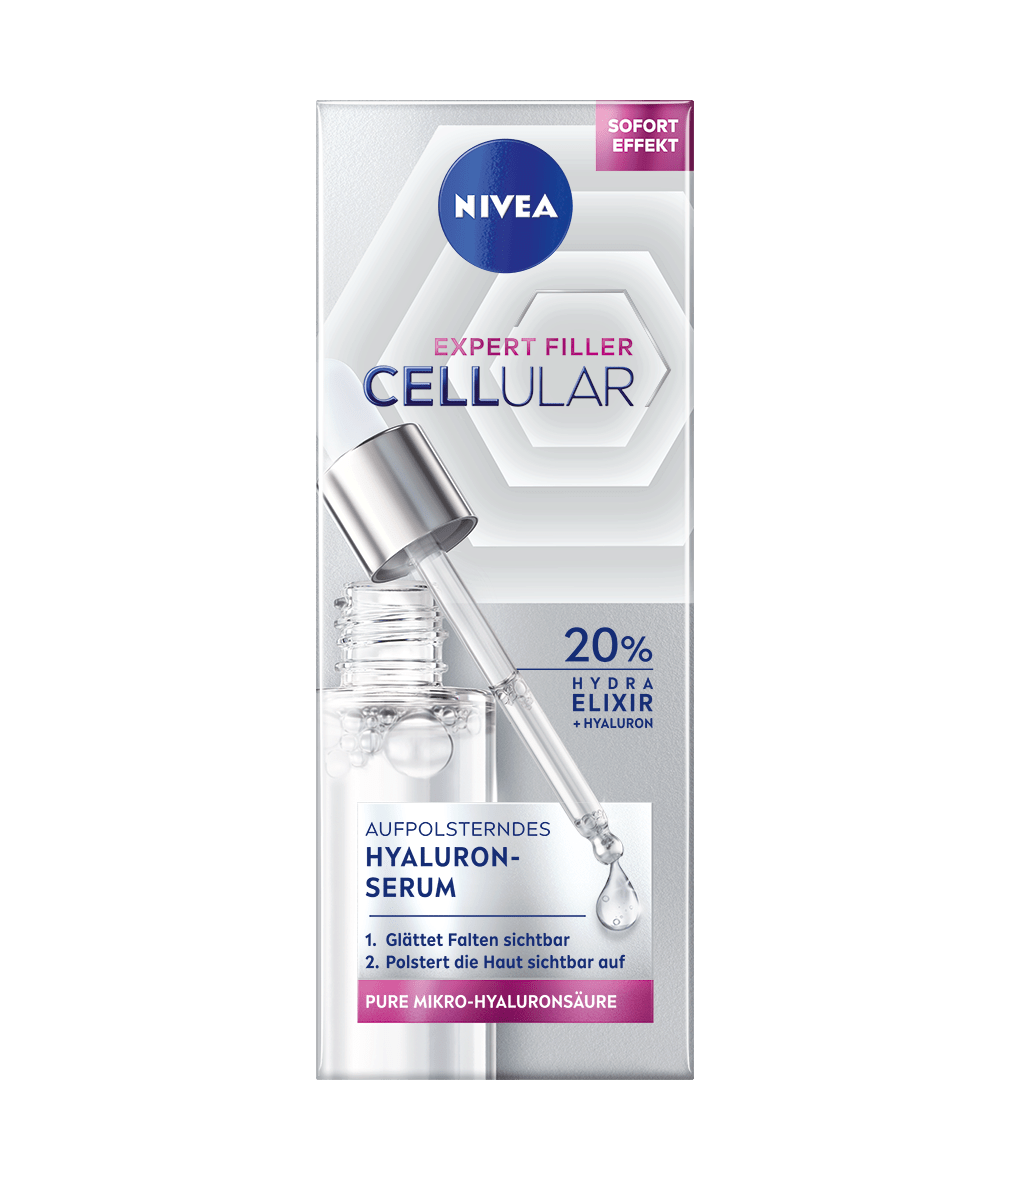 NIVEA Cellular Expert Filler Aufpolsterndes Hyaluron Serum 30 ml